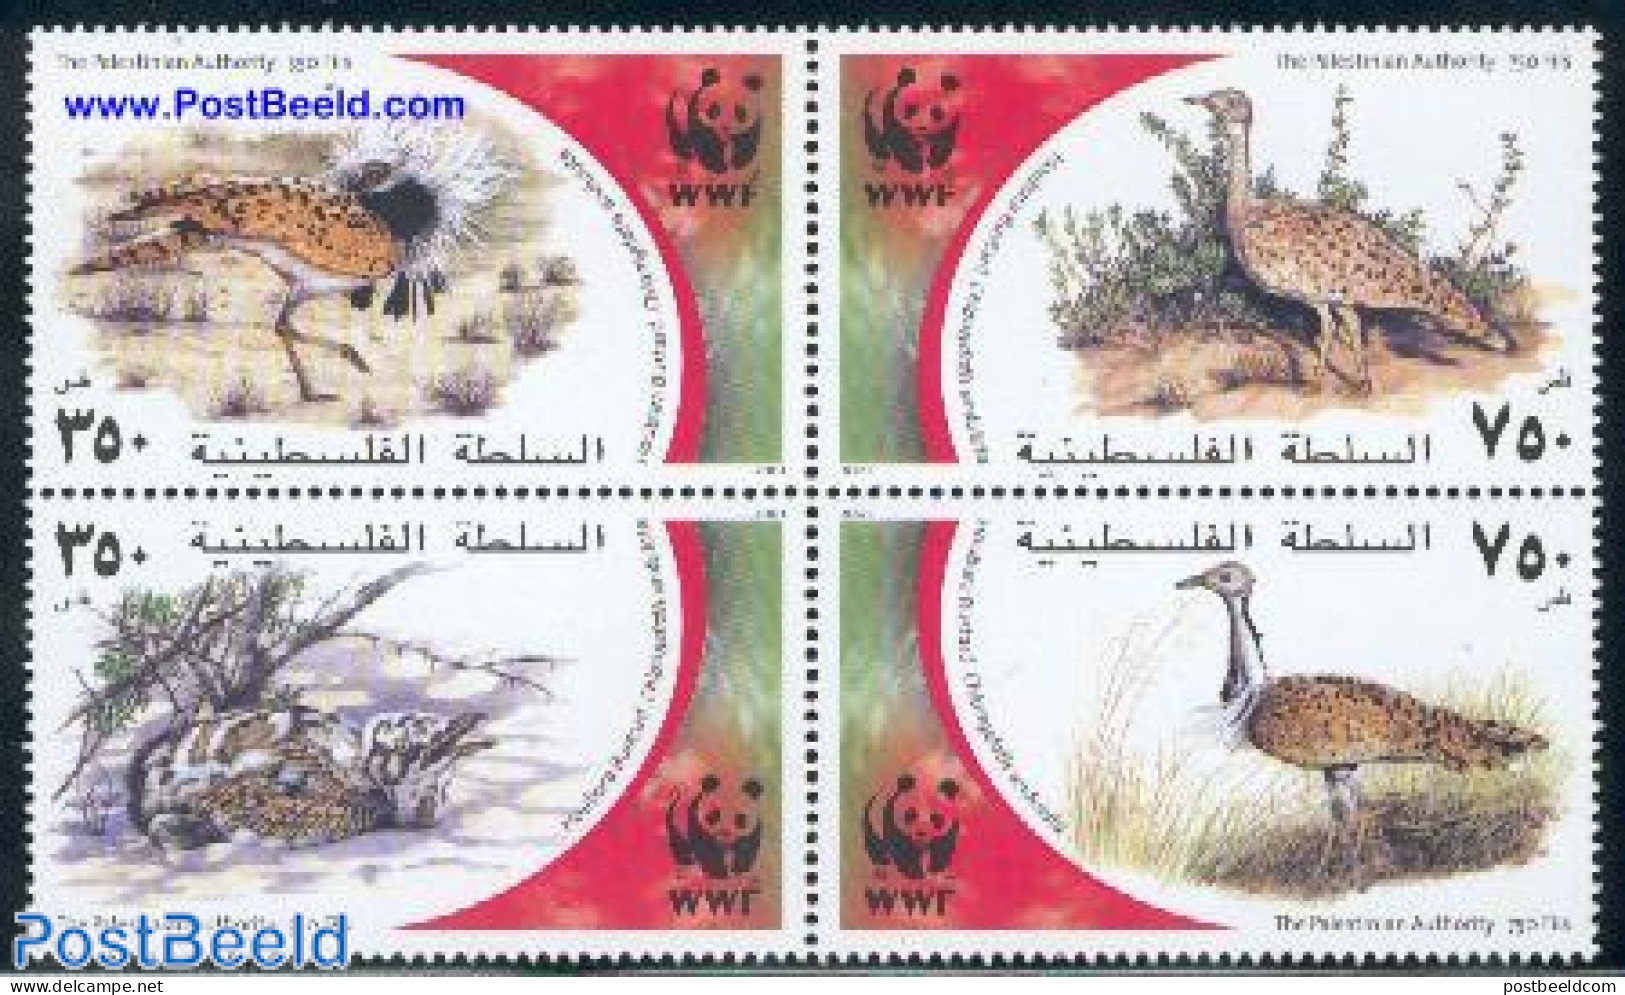 Palestinian Terr. 2001 WWF 4v [+], Mint NH, Nature - Birds - World Wildlife Fund (WWF) - Palestine